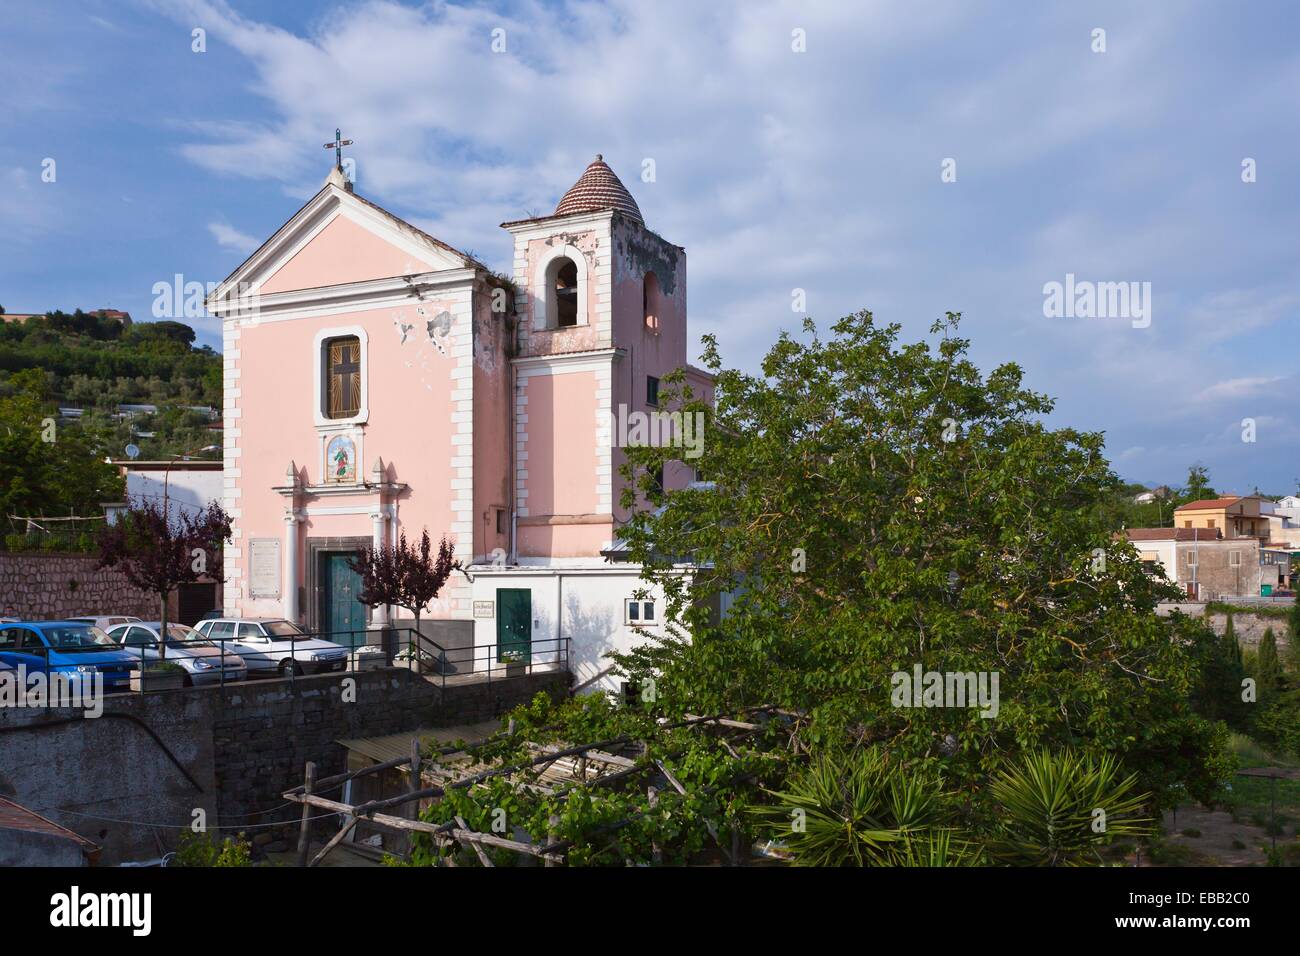 La petite église en castellano pastel Centro Santa Agata, Pastena, Campanie, Italie Banque D'Images